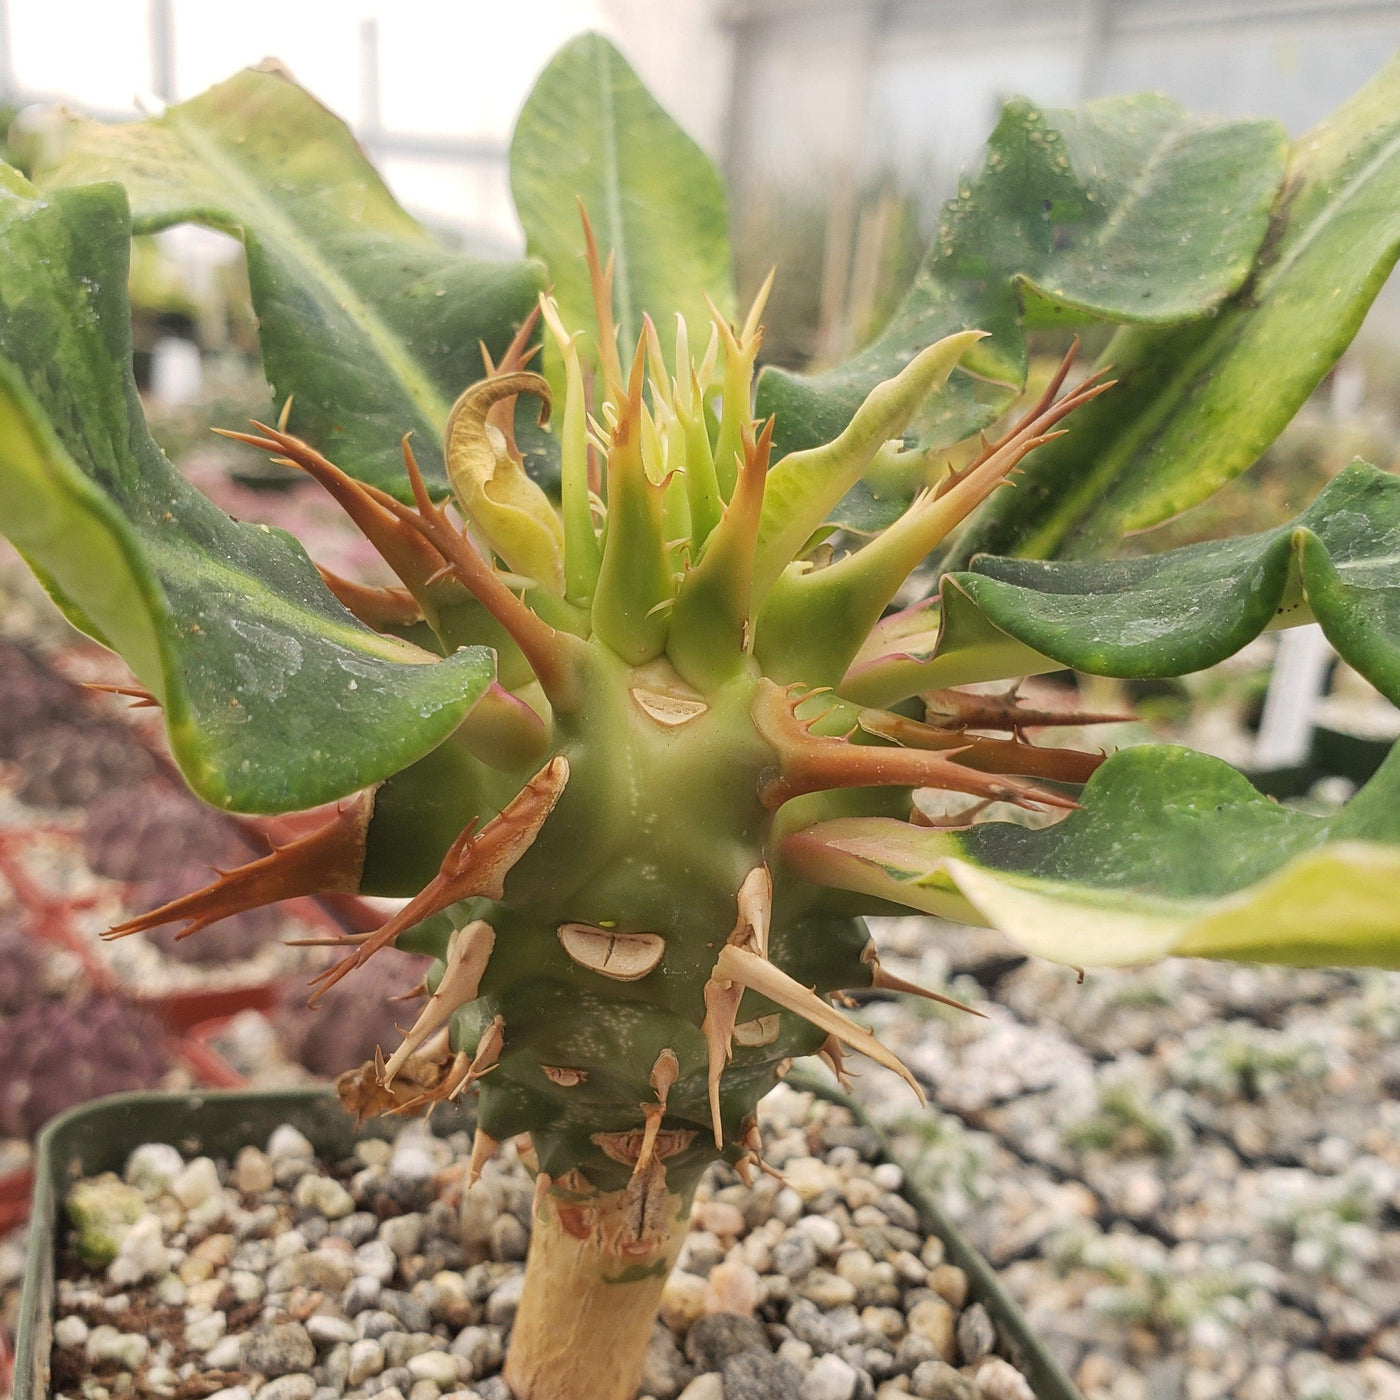 Euphorbia vigueri capuroniana